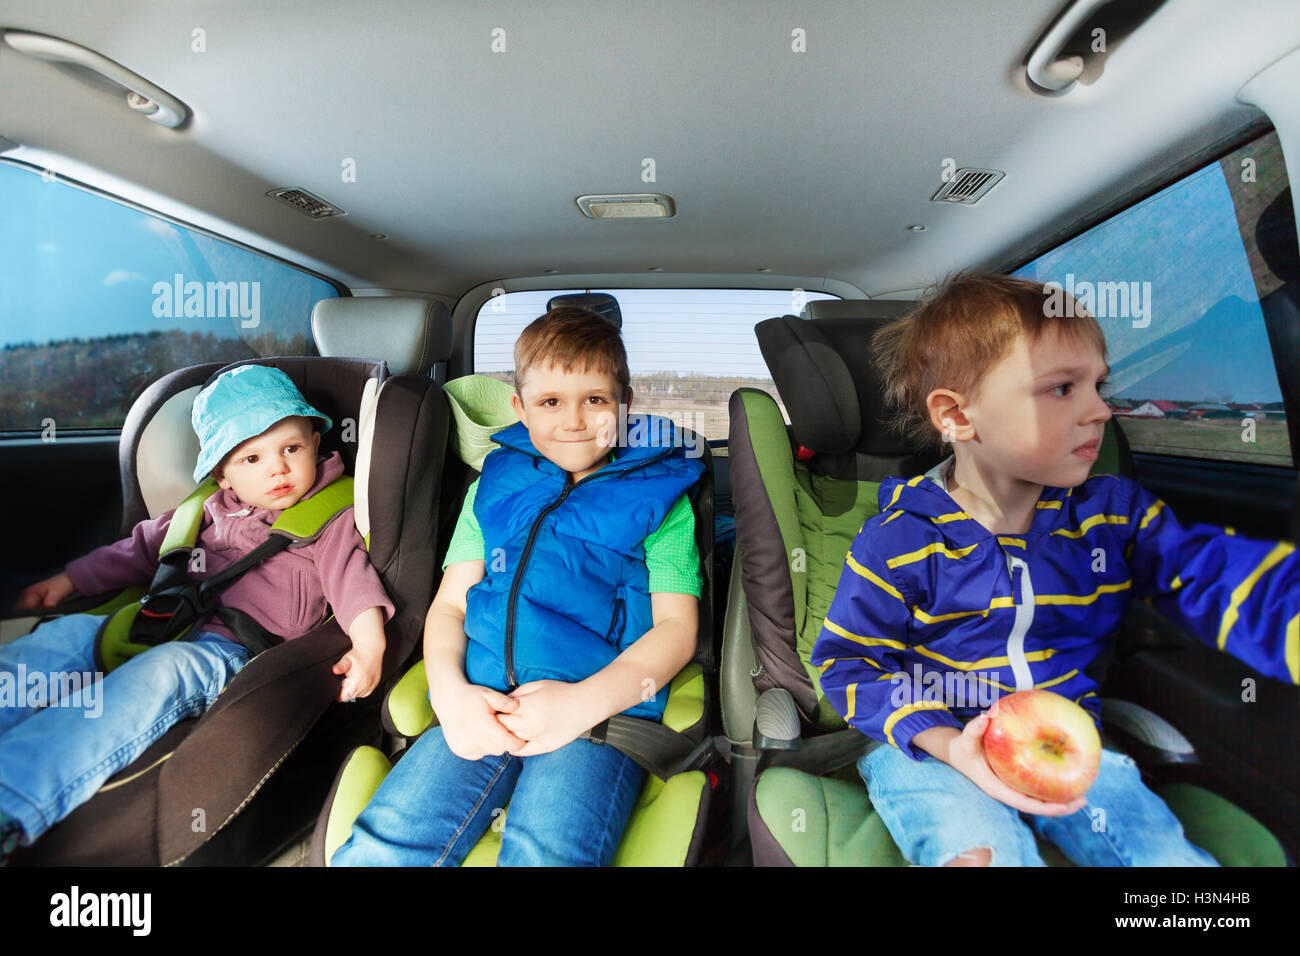 https://c8.alamy.com/comp/H3N4HB/three-little-boys-sitting-in-safety-car-seats-H3N4HB.jpg